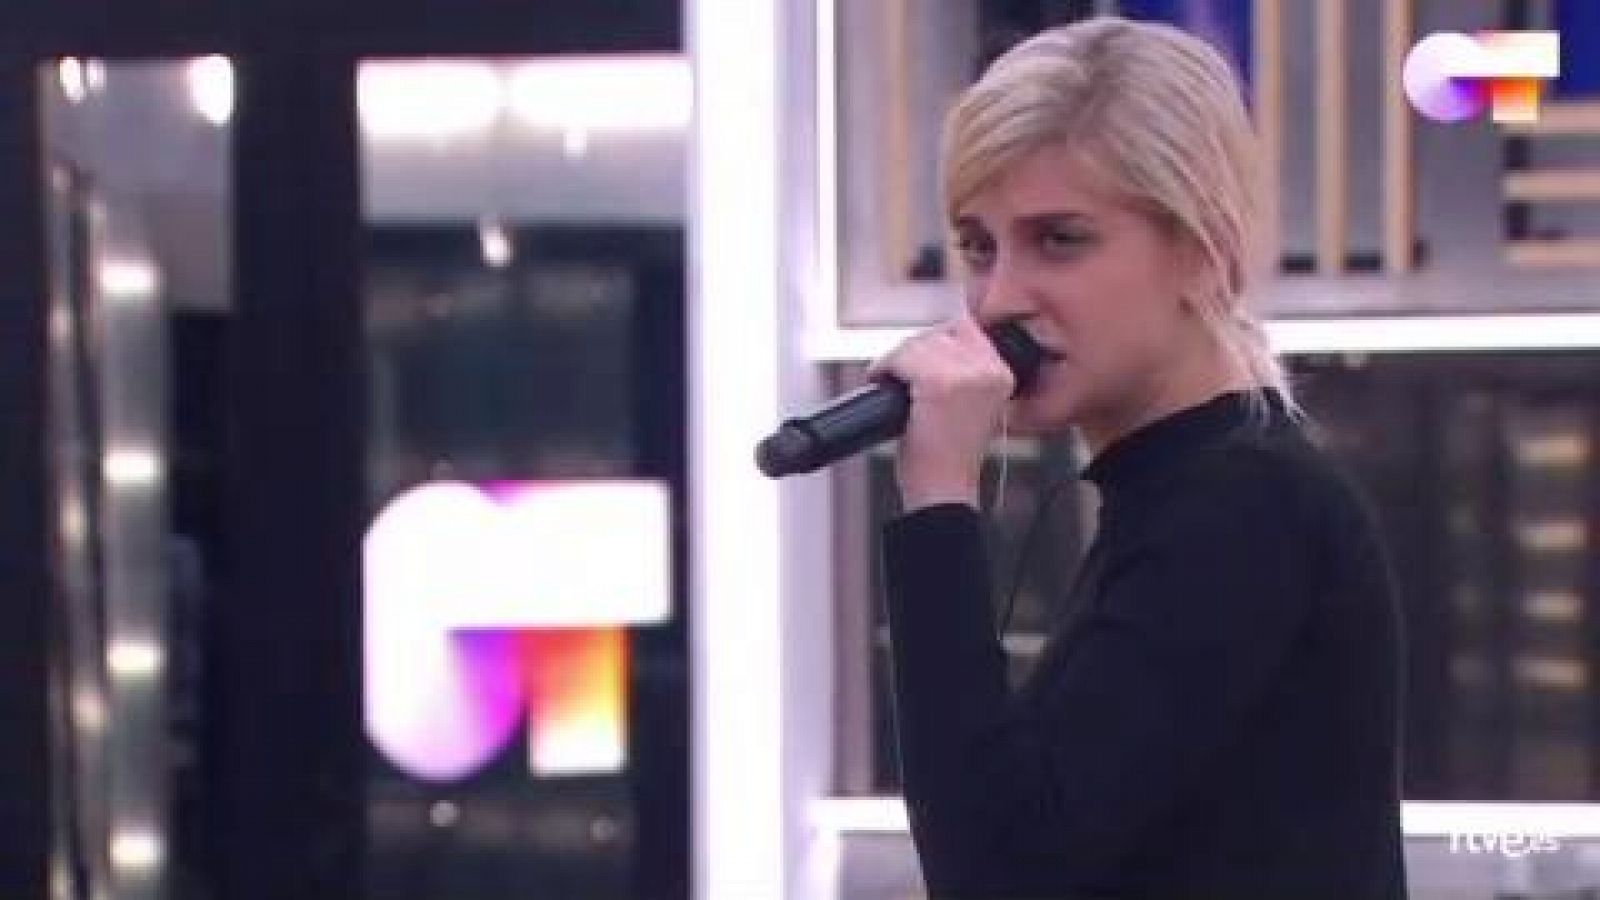 Samantha canta "Human", de Christina Perri, en el primer pase de micros de la Gala 7 de Operación Triunfo 2020